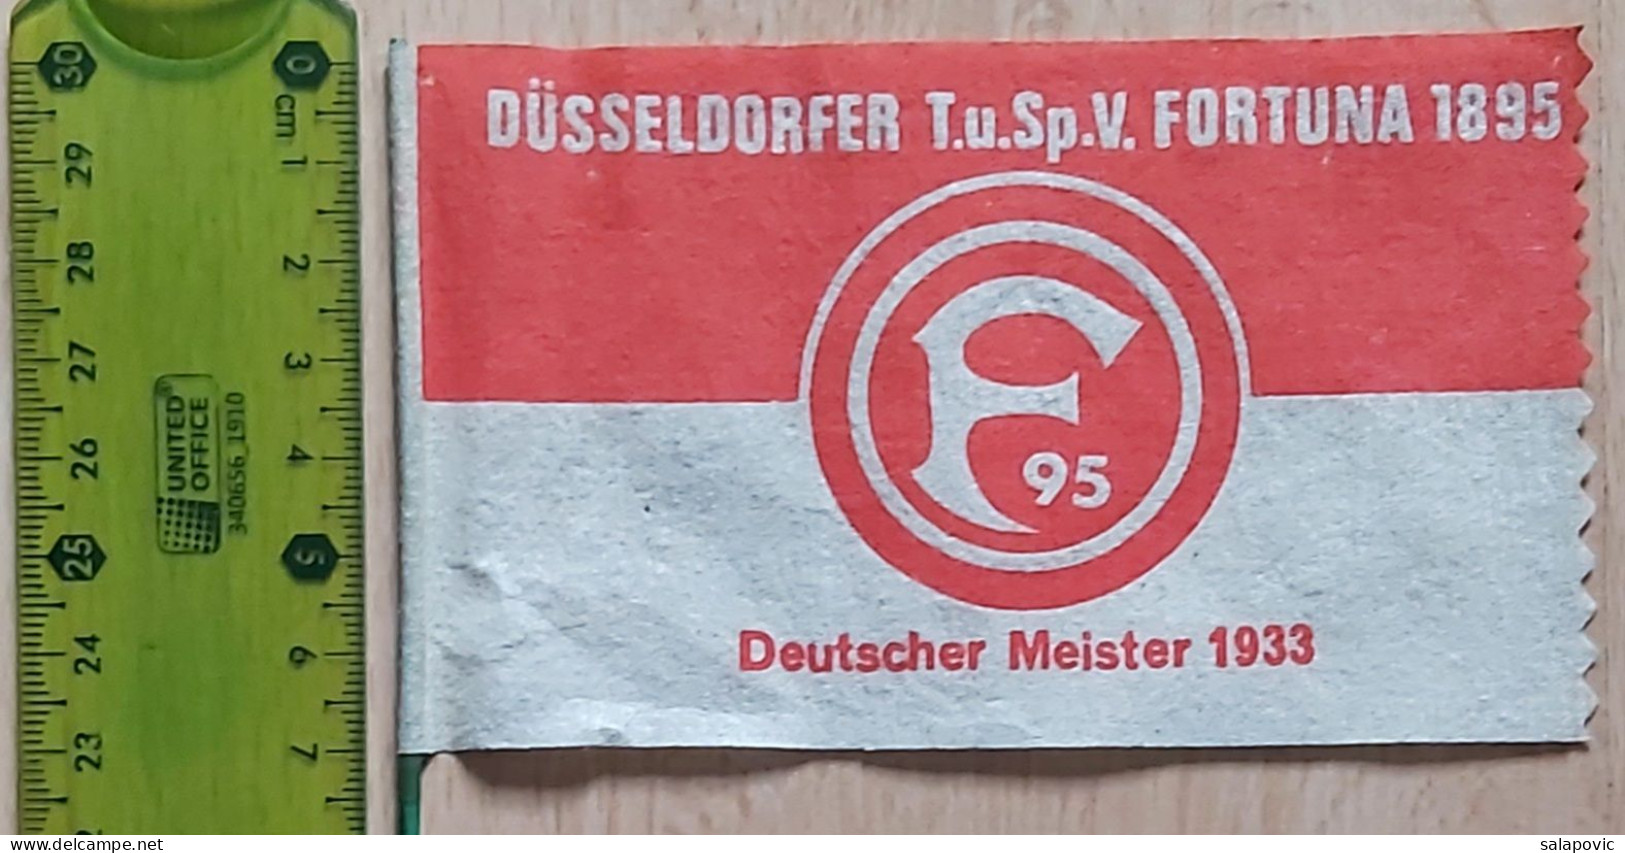 Düsseldorfer TuS Fortuna 1895  Germany, Deutscher Meister 1933 Football Club Fussball Soccer Calcio PENNANT ZS 1 KUT - Habillement, Souvenirs & Autres